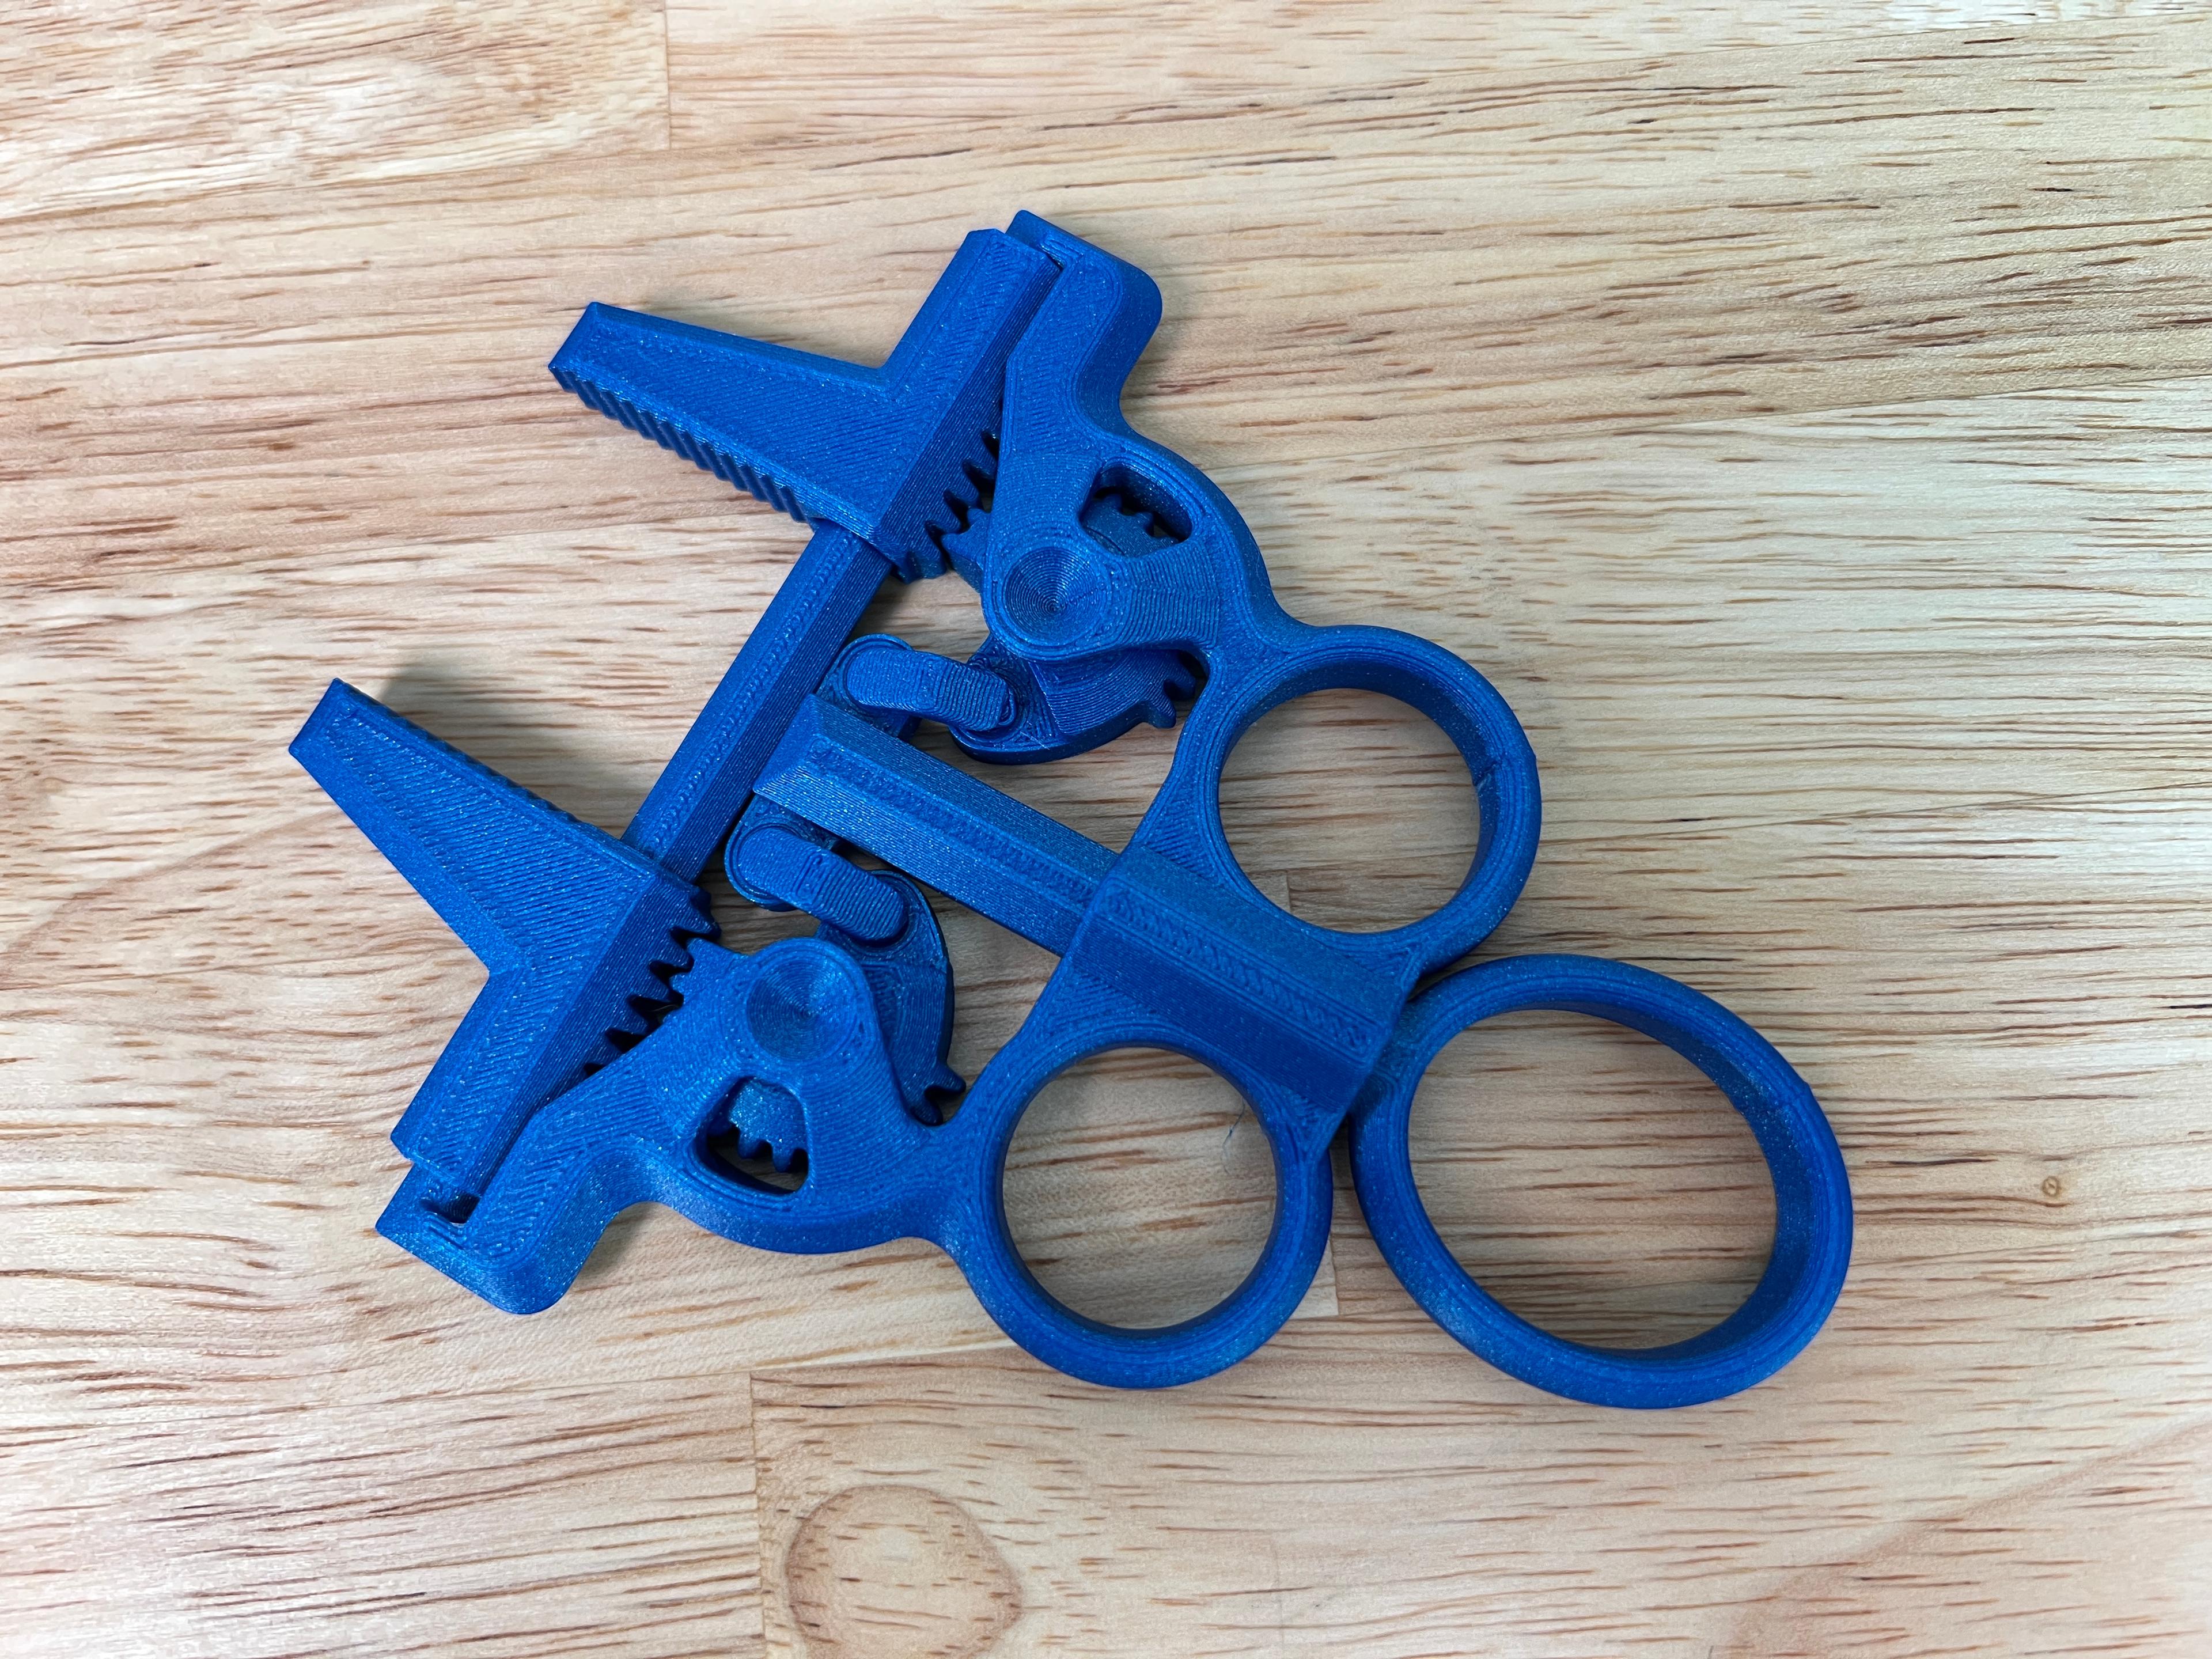 Locking Gripper Print-in-Place 3d model